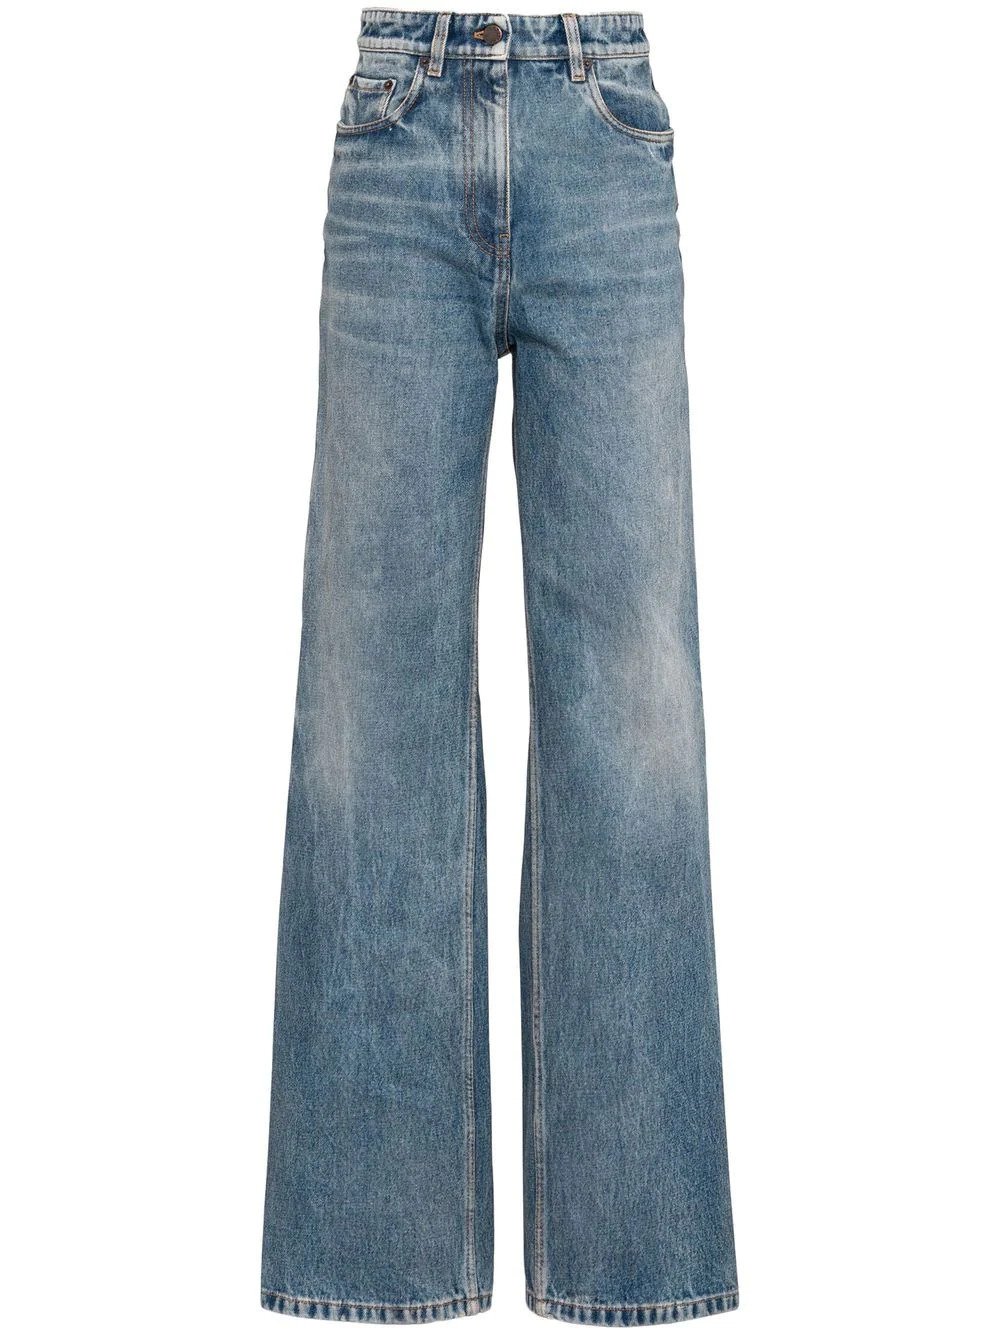 Prada high-rise straight-leg jeans.jpeg